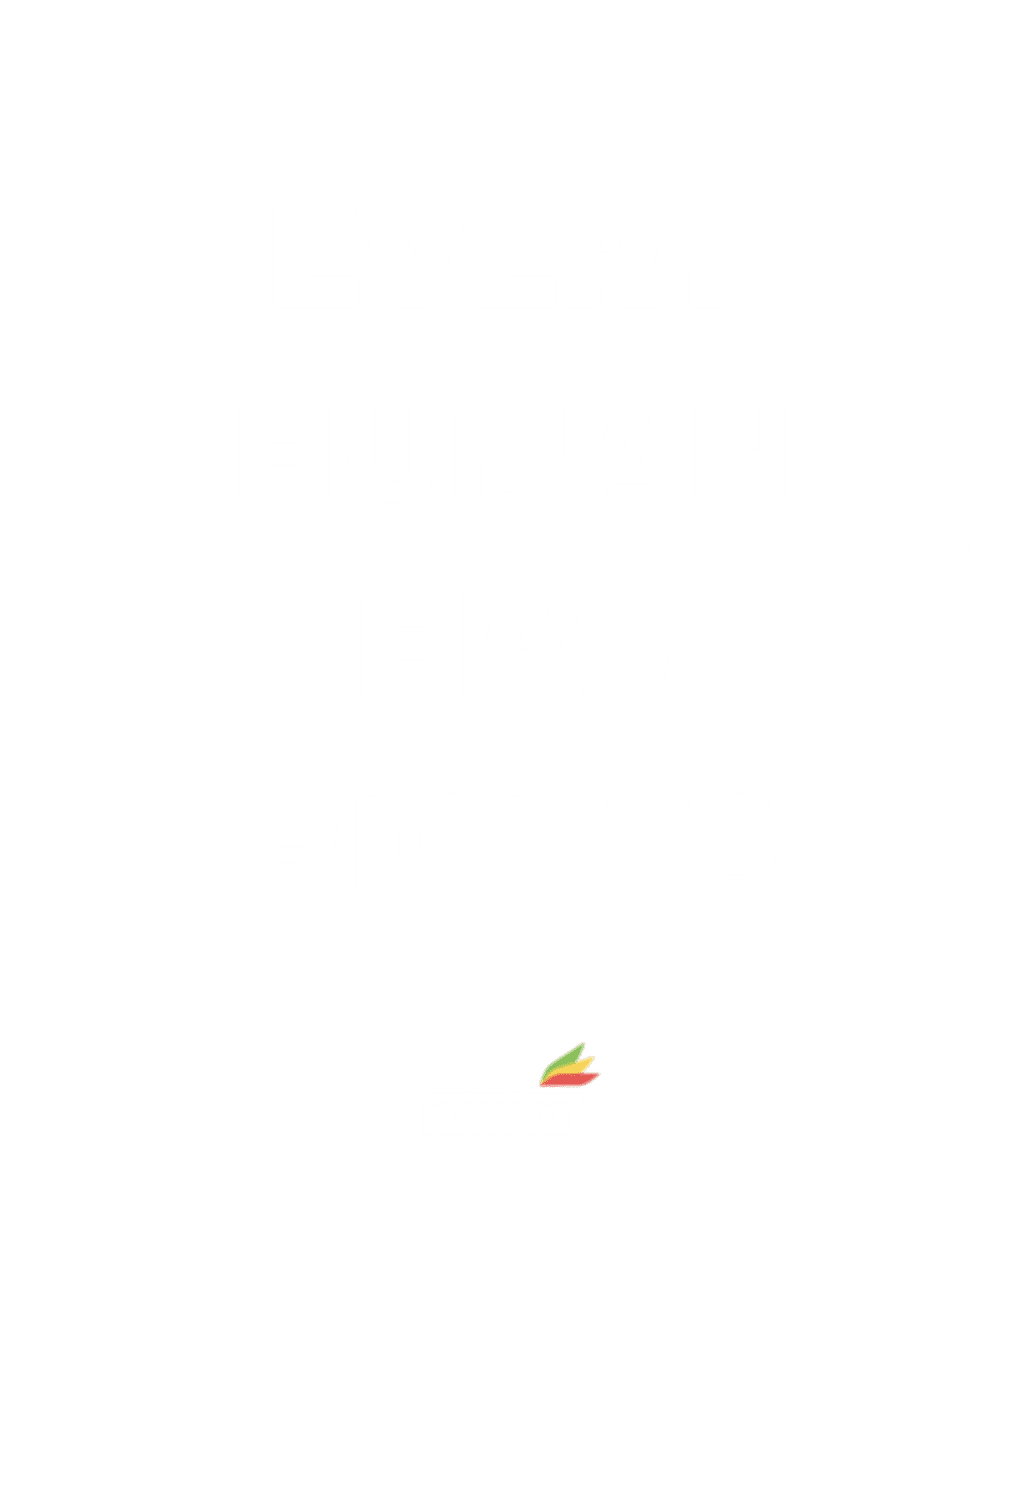 Every Human Has Rights - #balouosaloforhumanrights